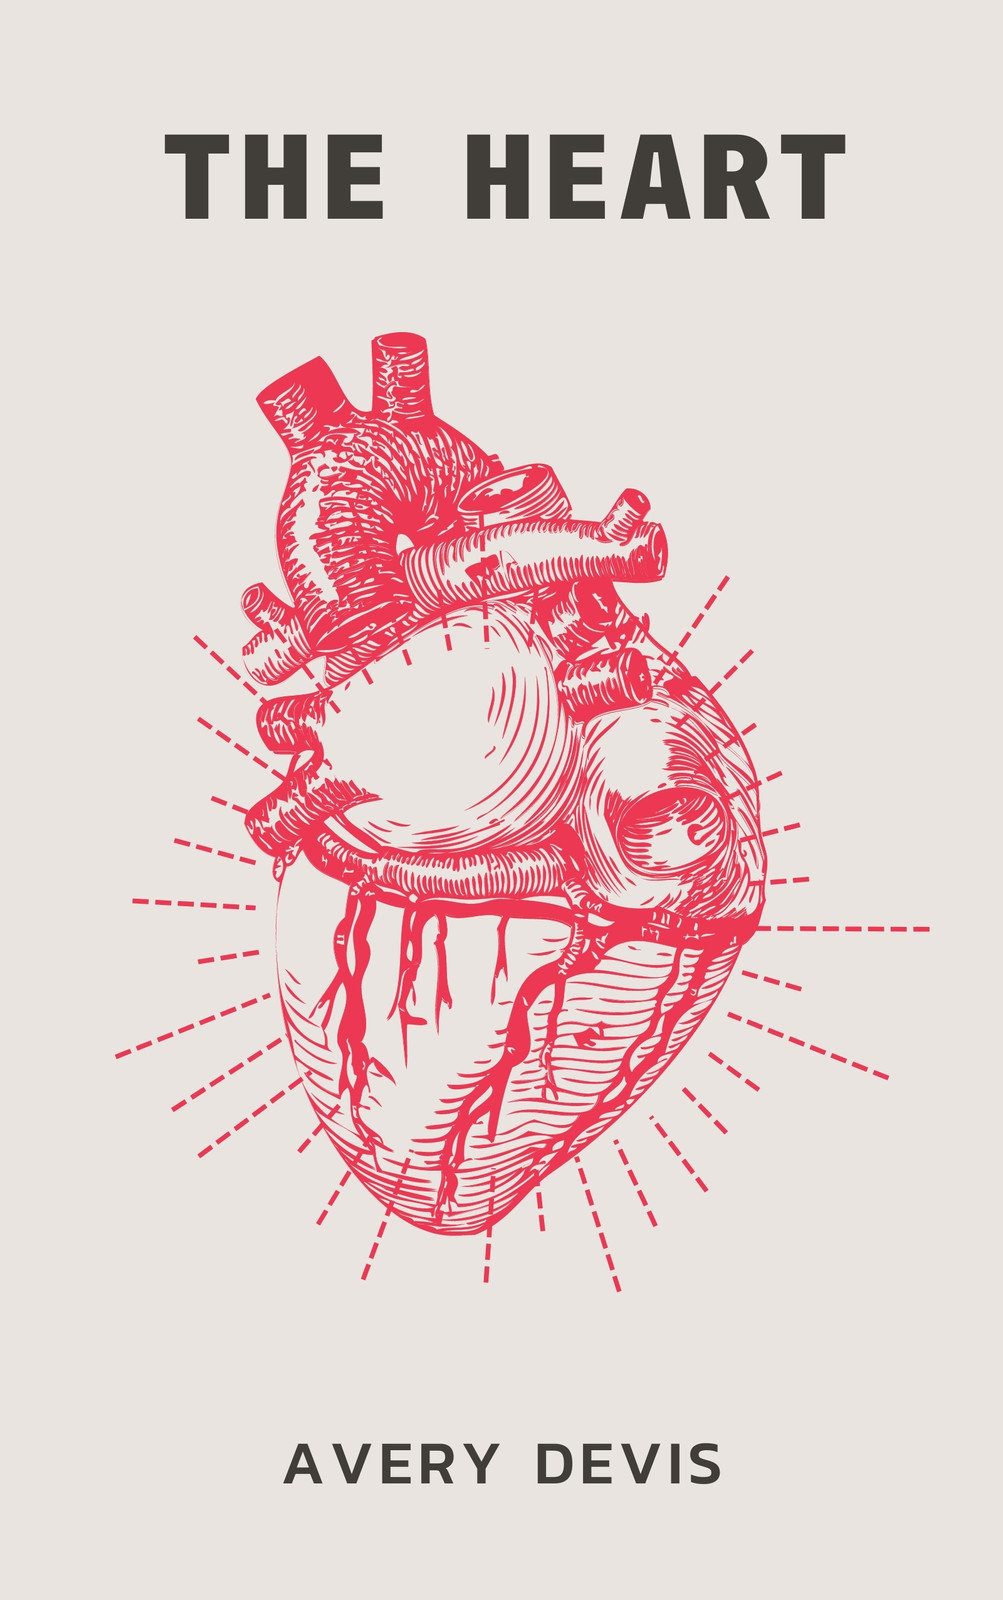 Download Colorful Instagram Profile Heart Wallpaper